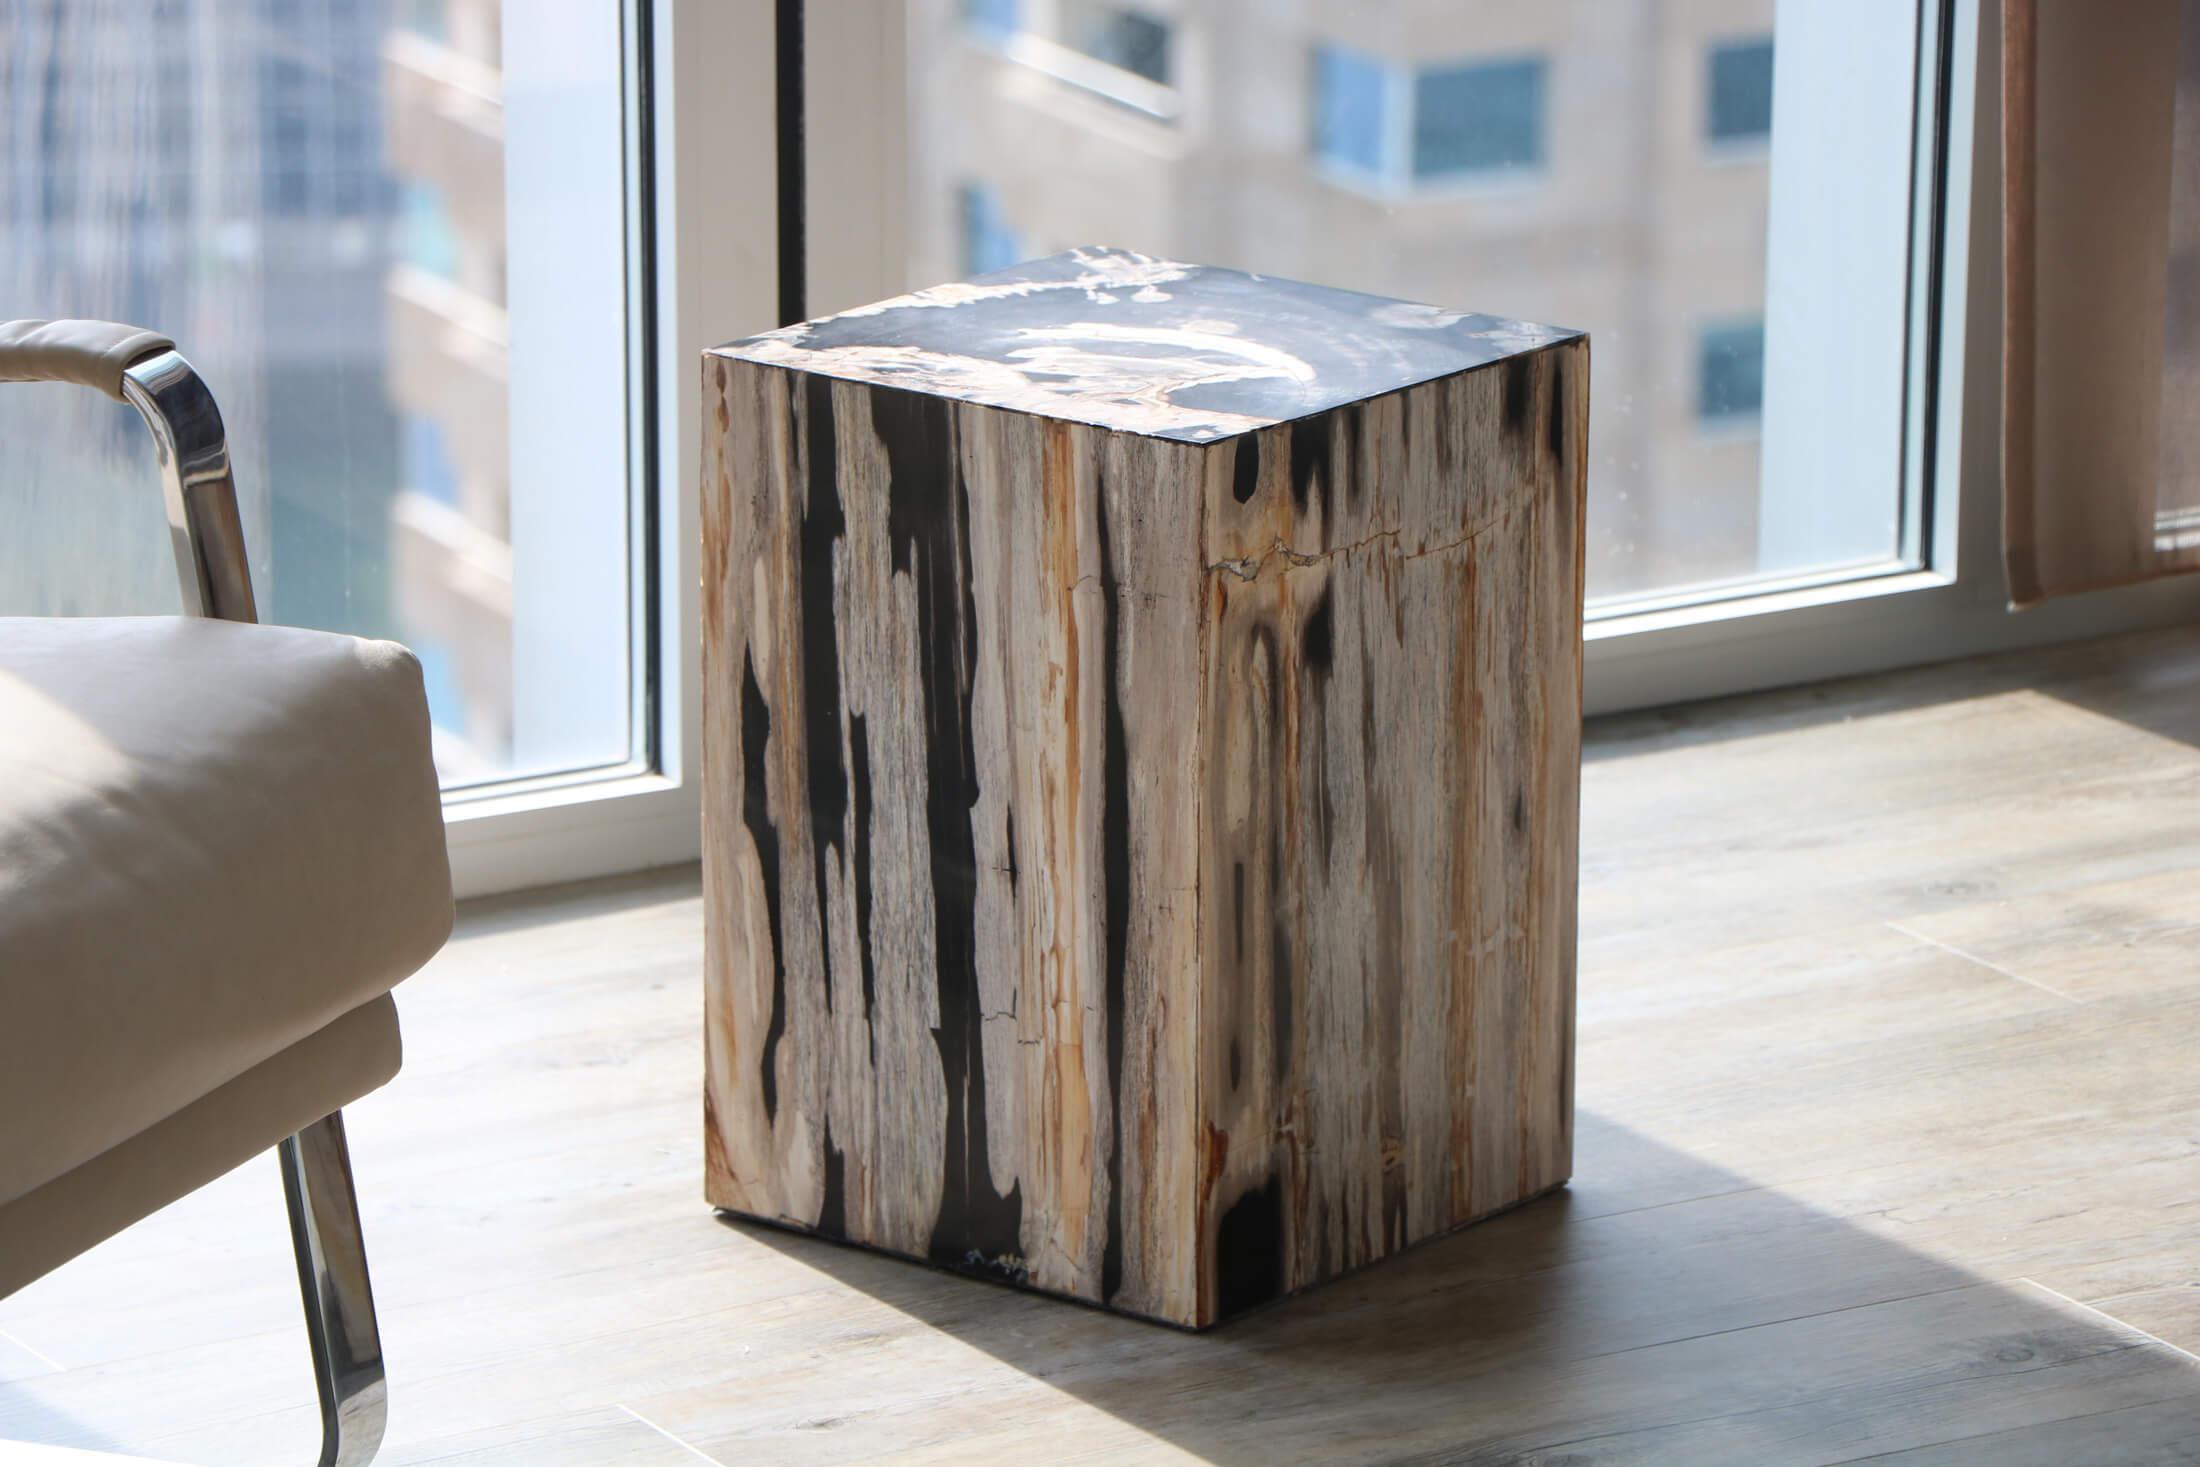 Petrified wood stool